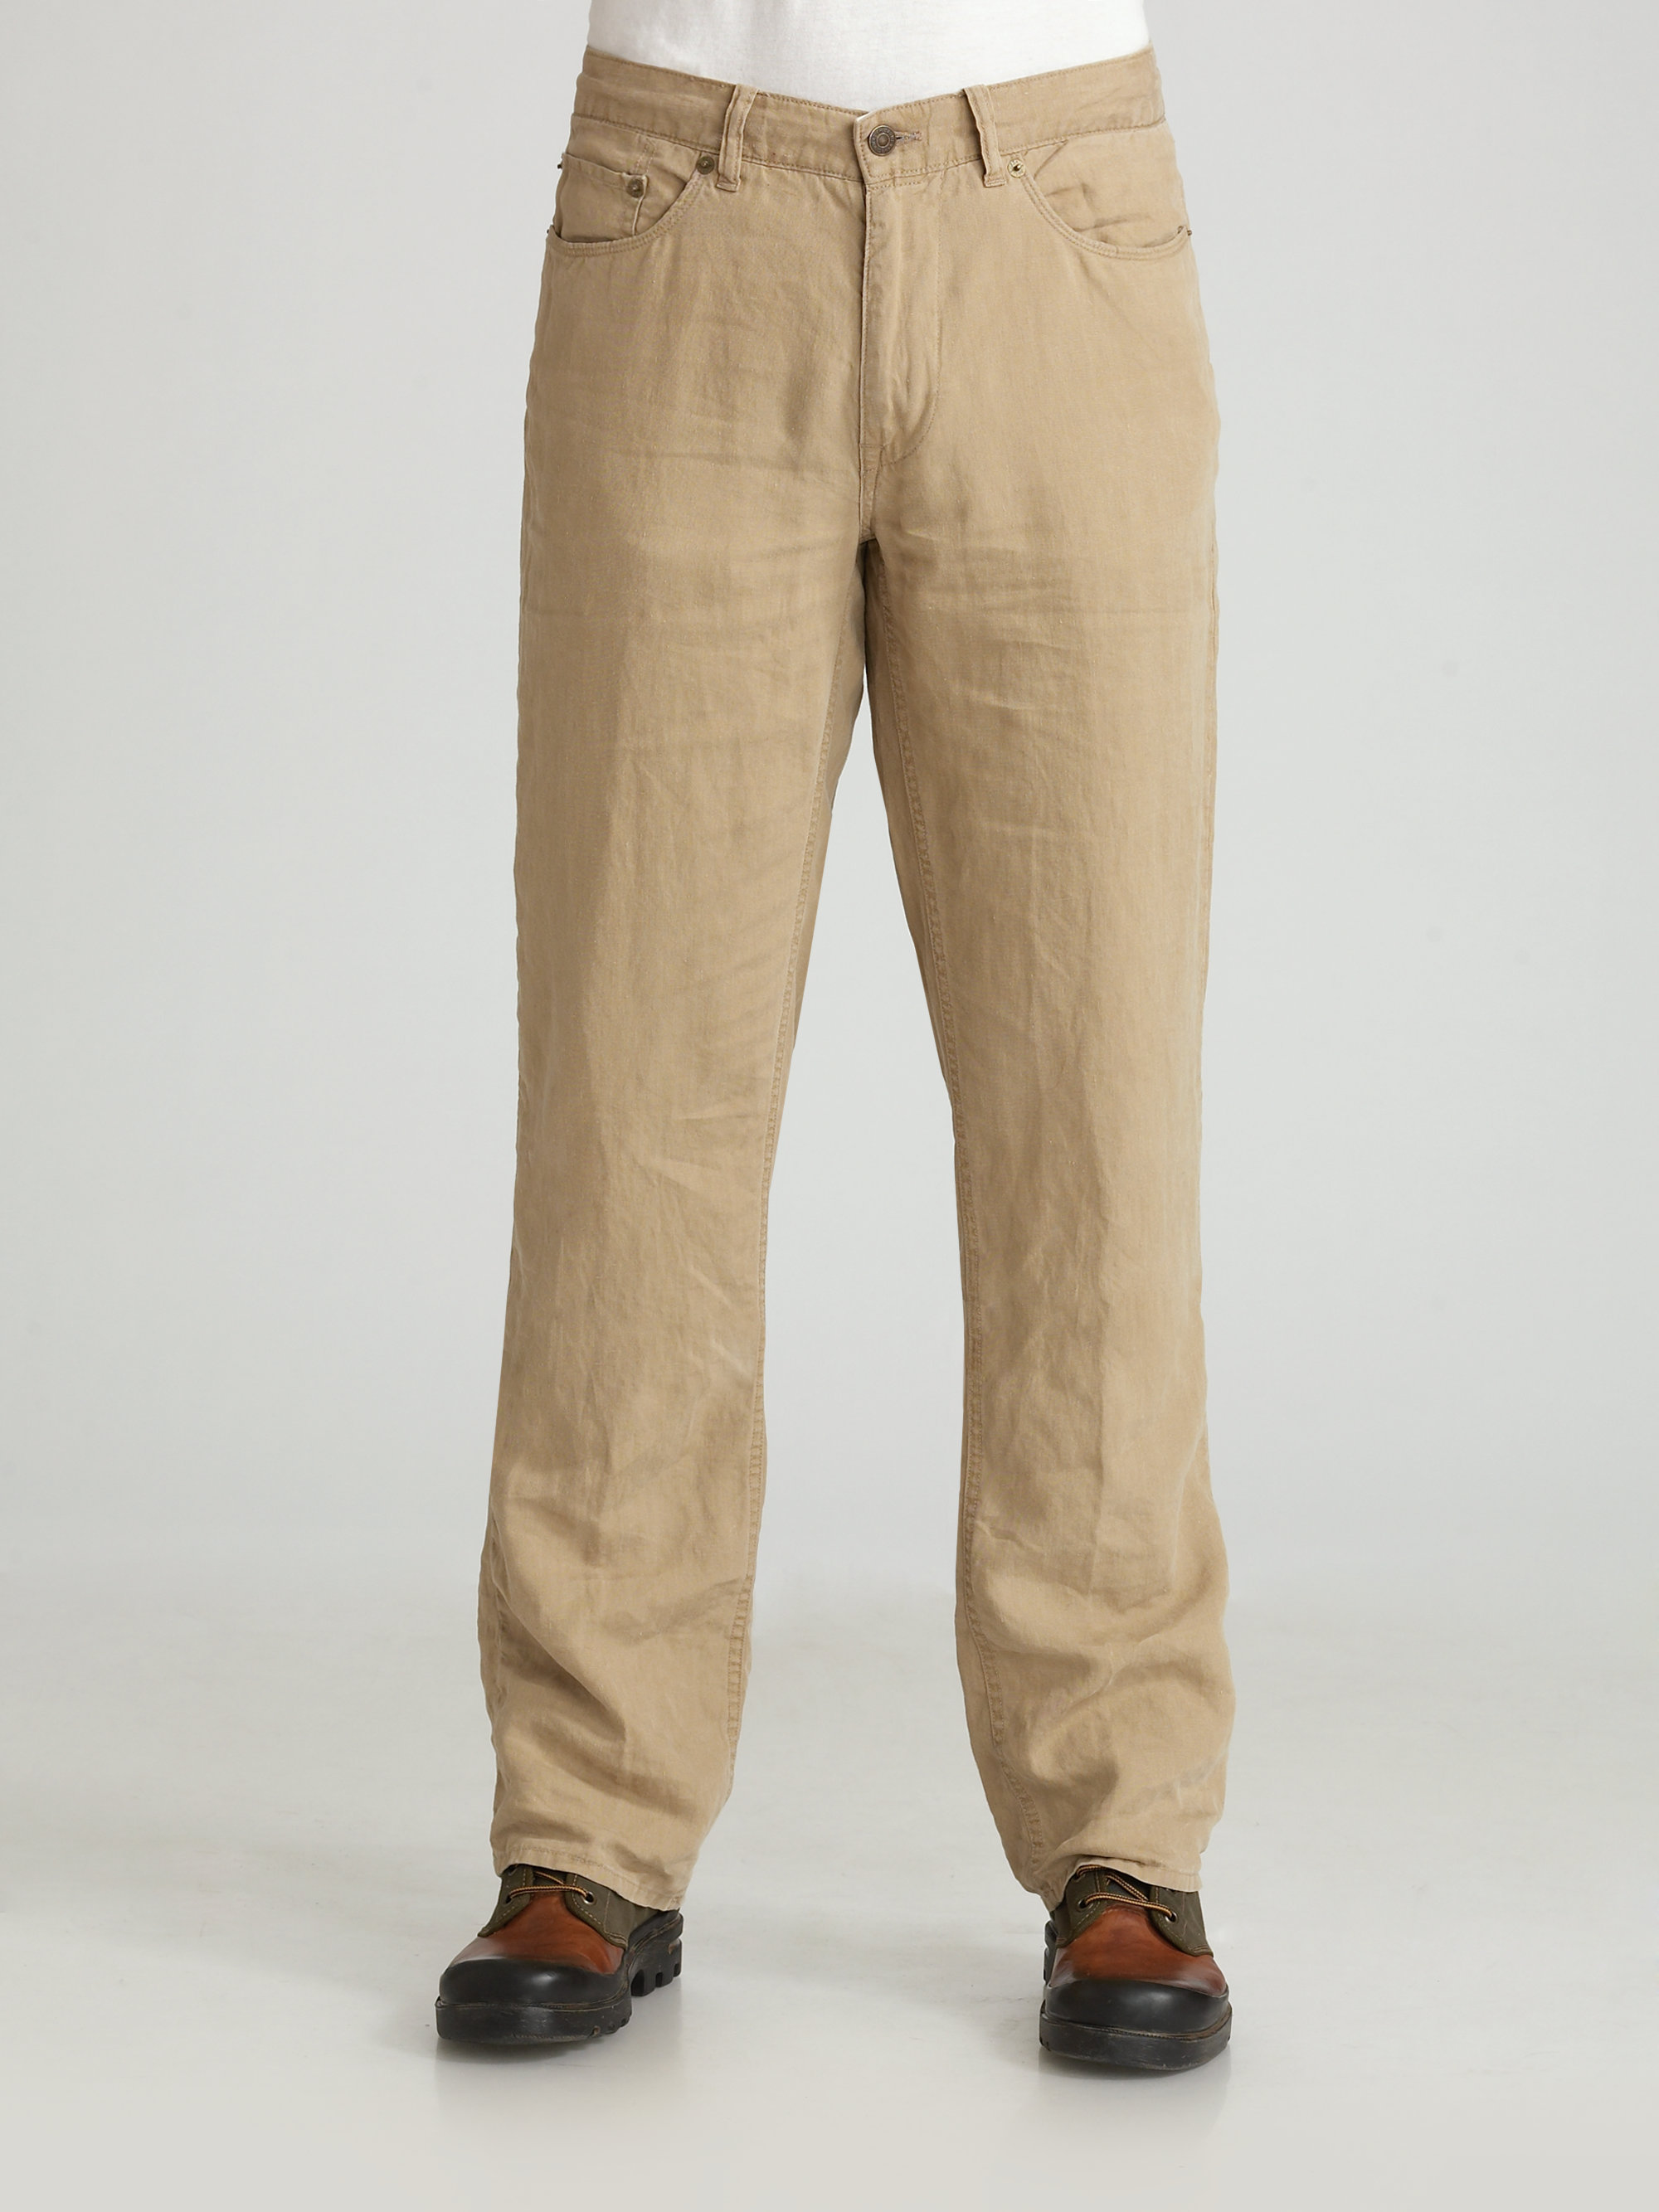 Polo Ralph Lauren Linen Pants in Natural for Men - Lyst